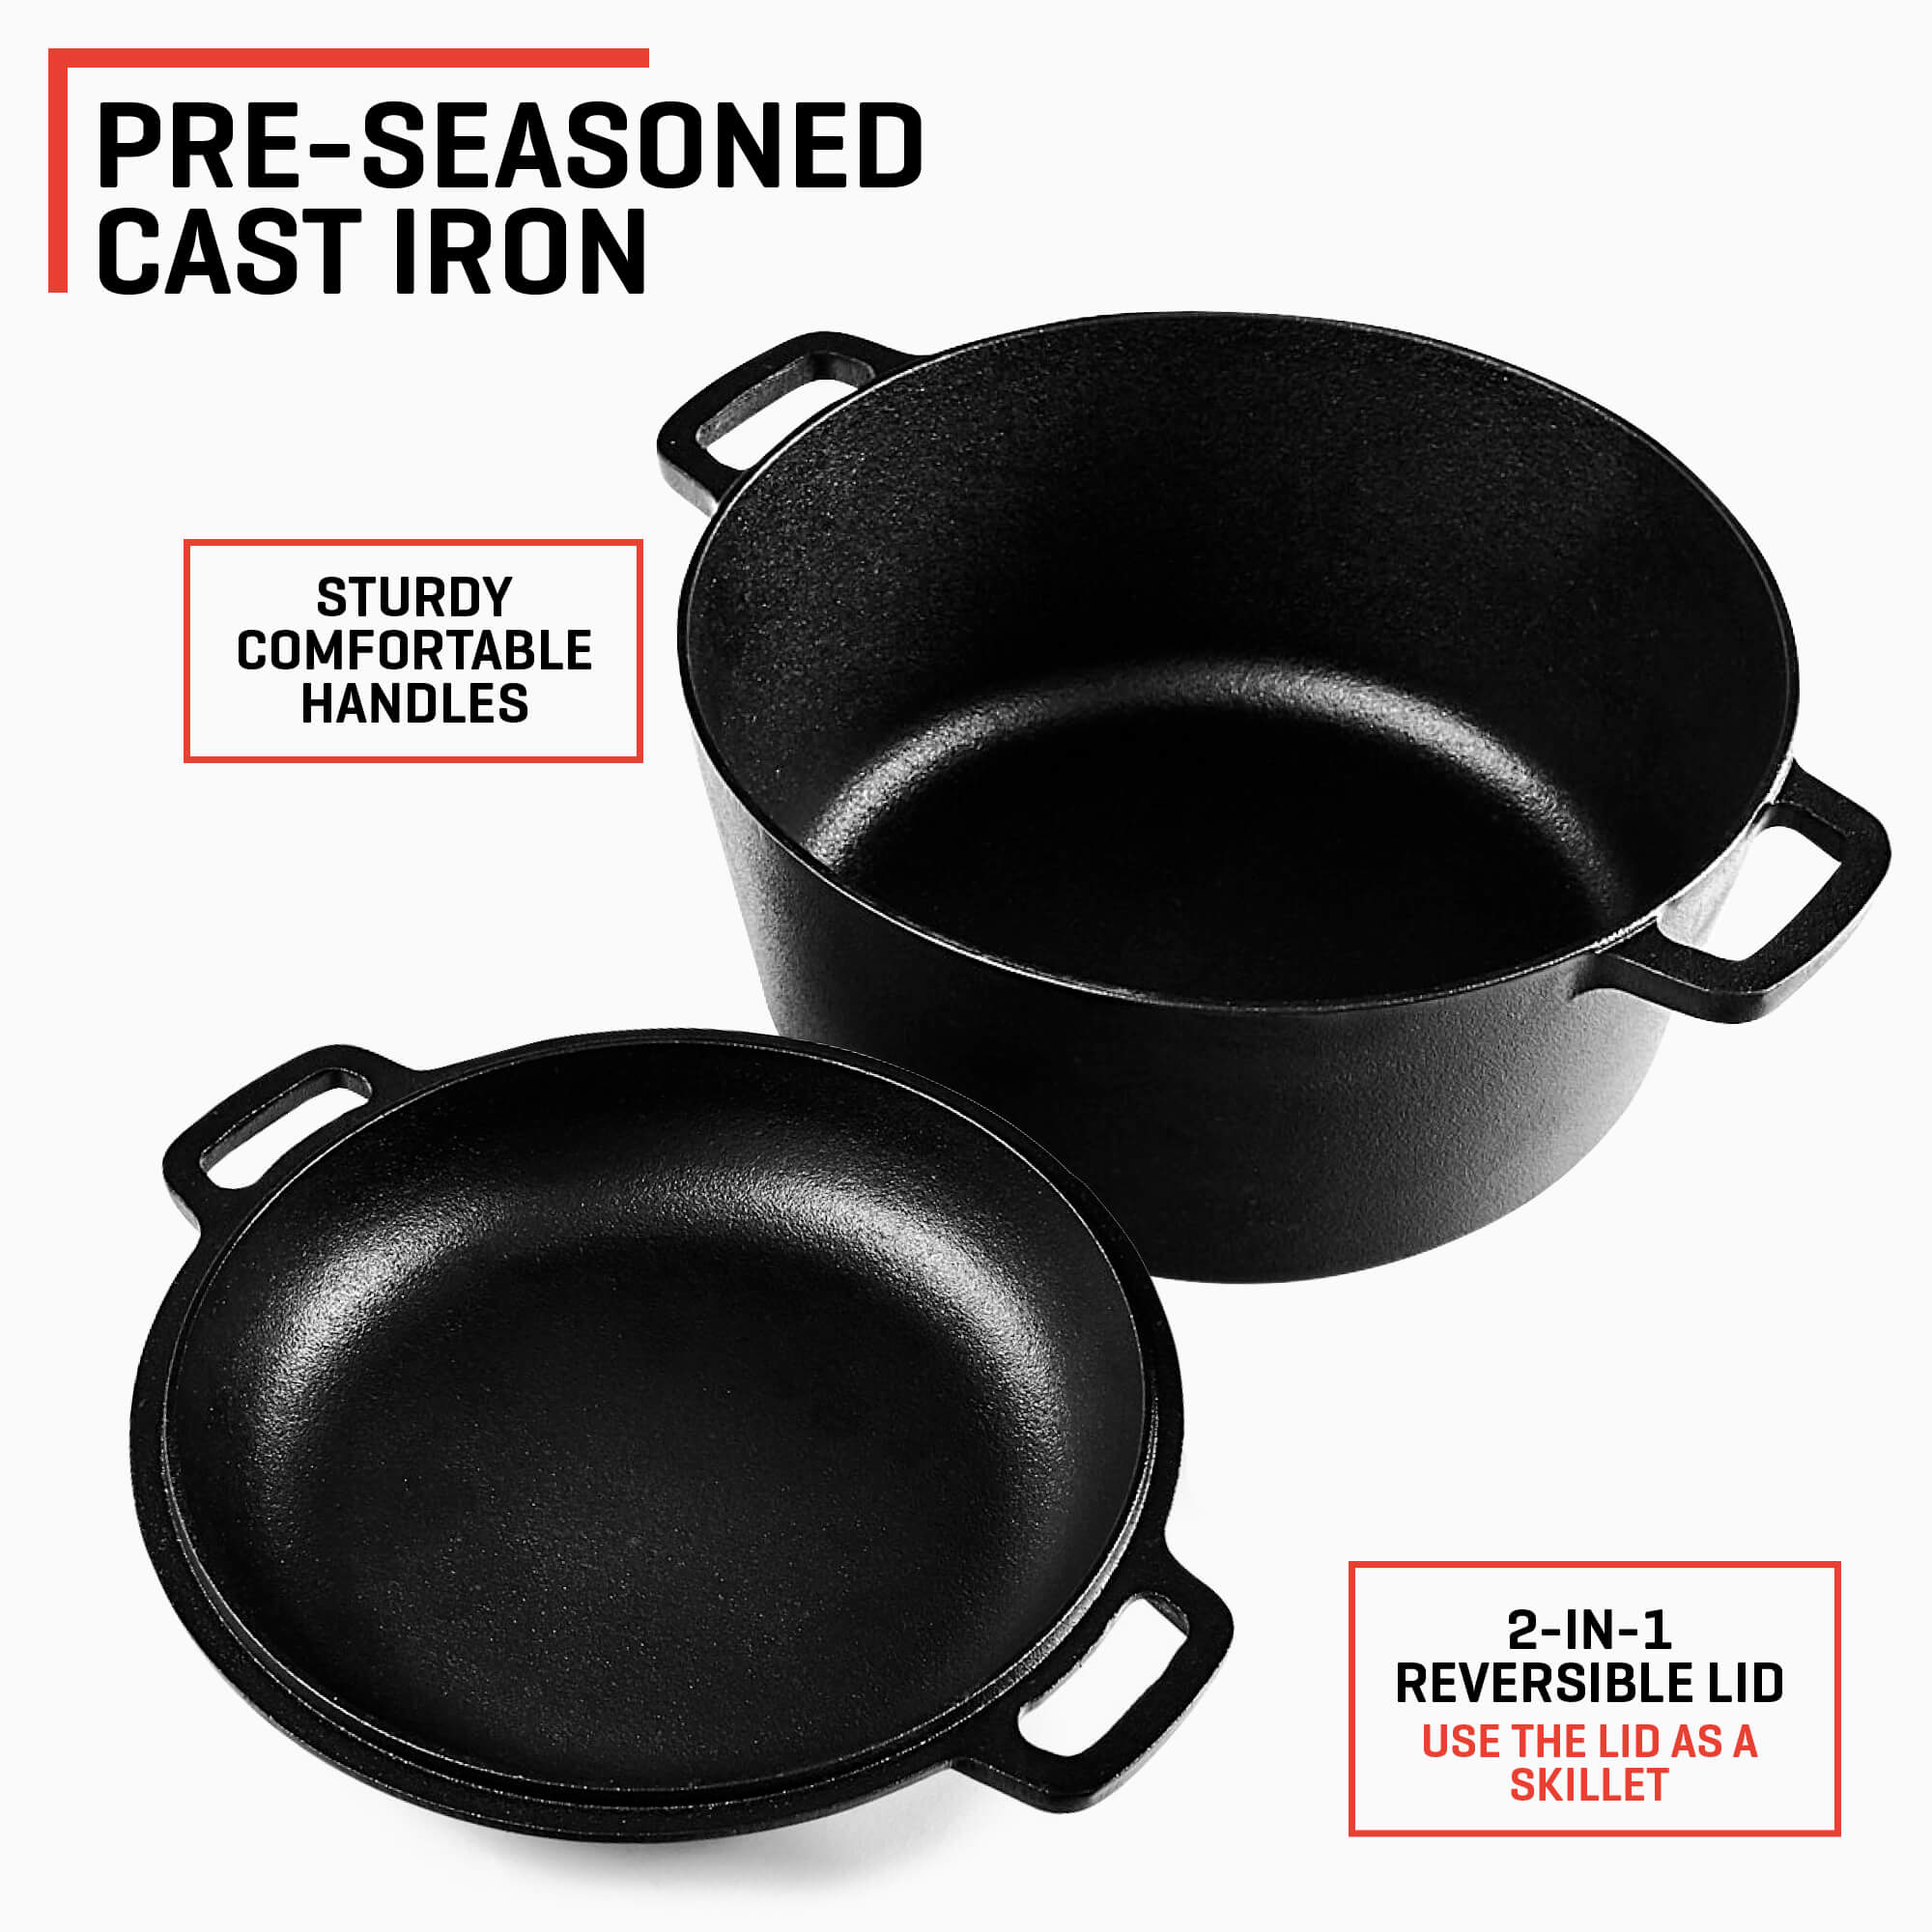 Cuisinel Pre Seasoned Cast Iron Skillet and 3 QT Double Dutch Oven Set